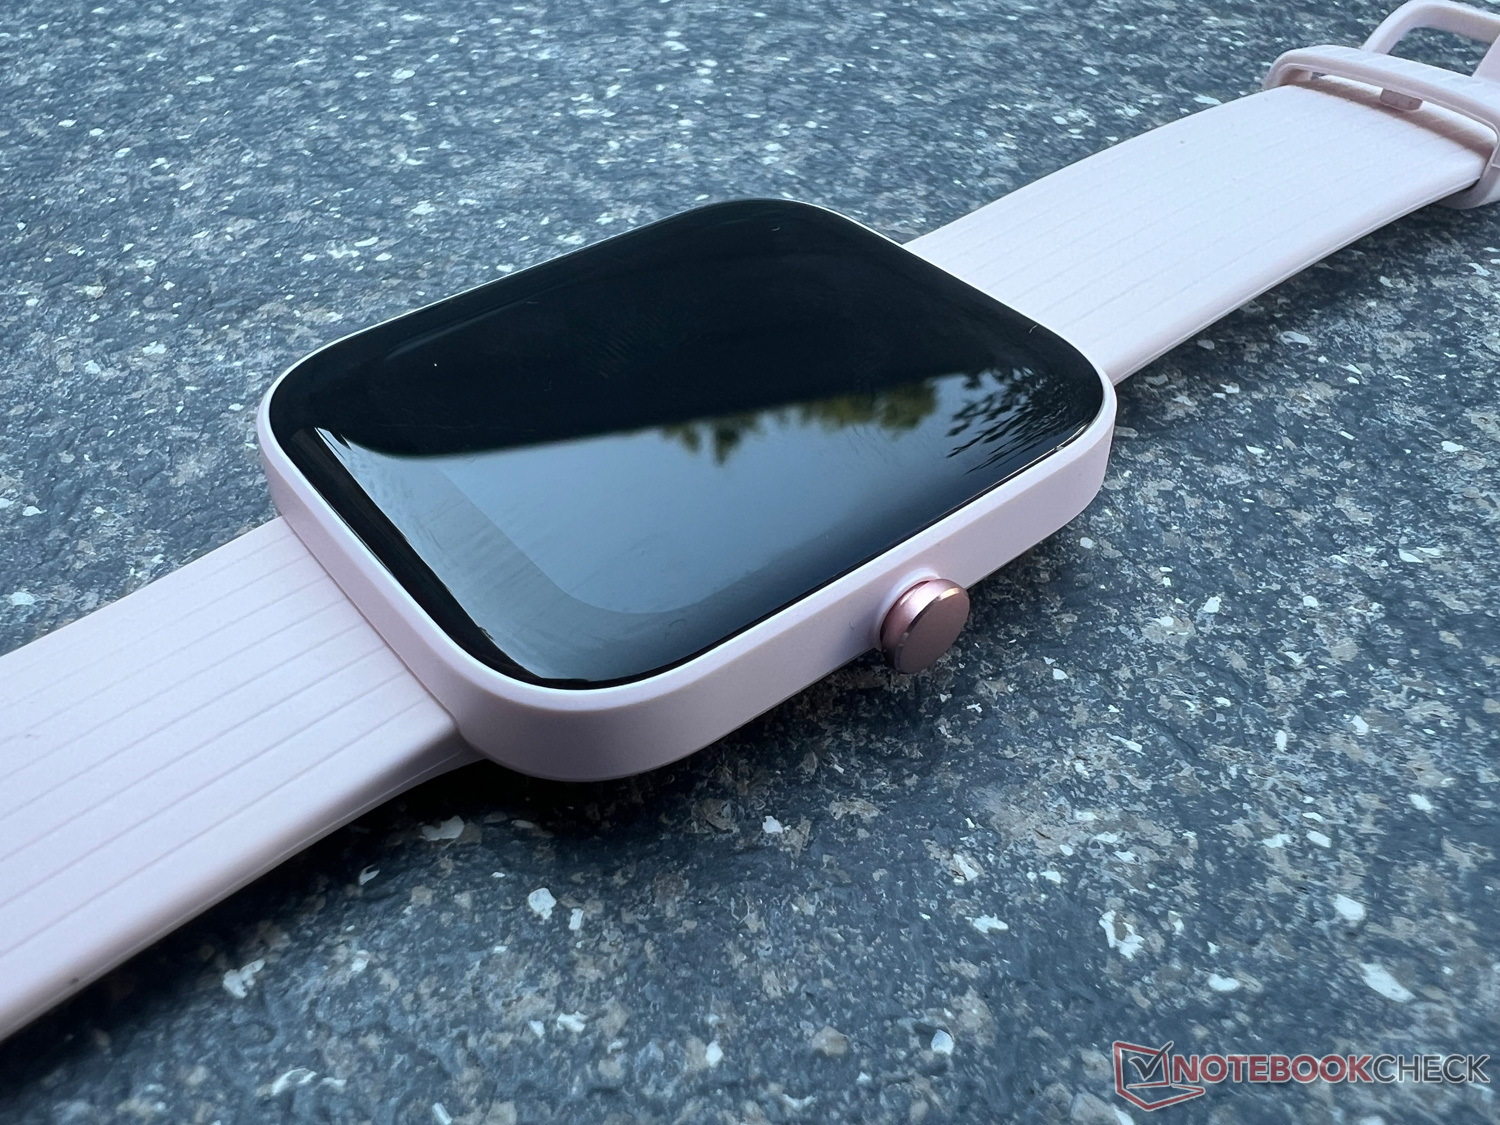 Análisis del Amazfit Bip 3 Pro: Un smartwatch asequible revela una